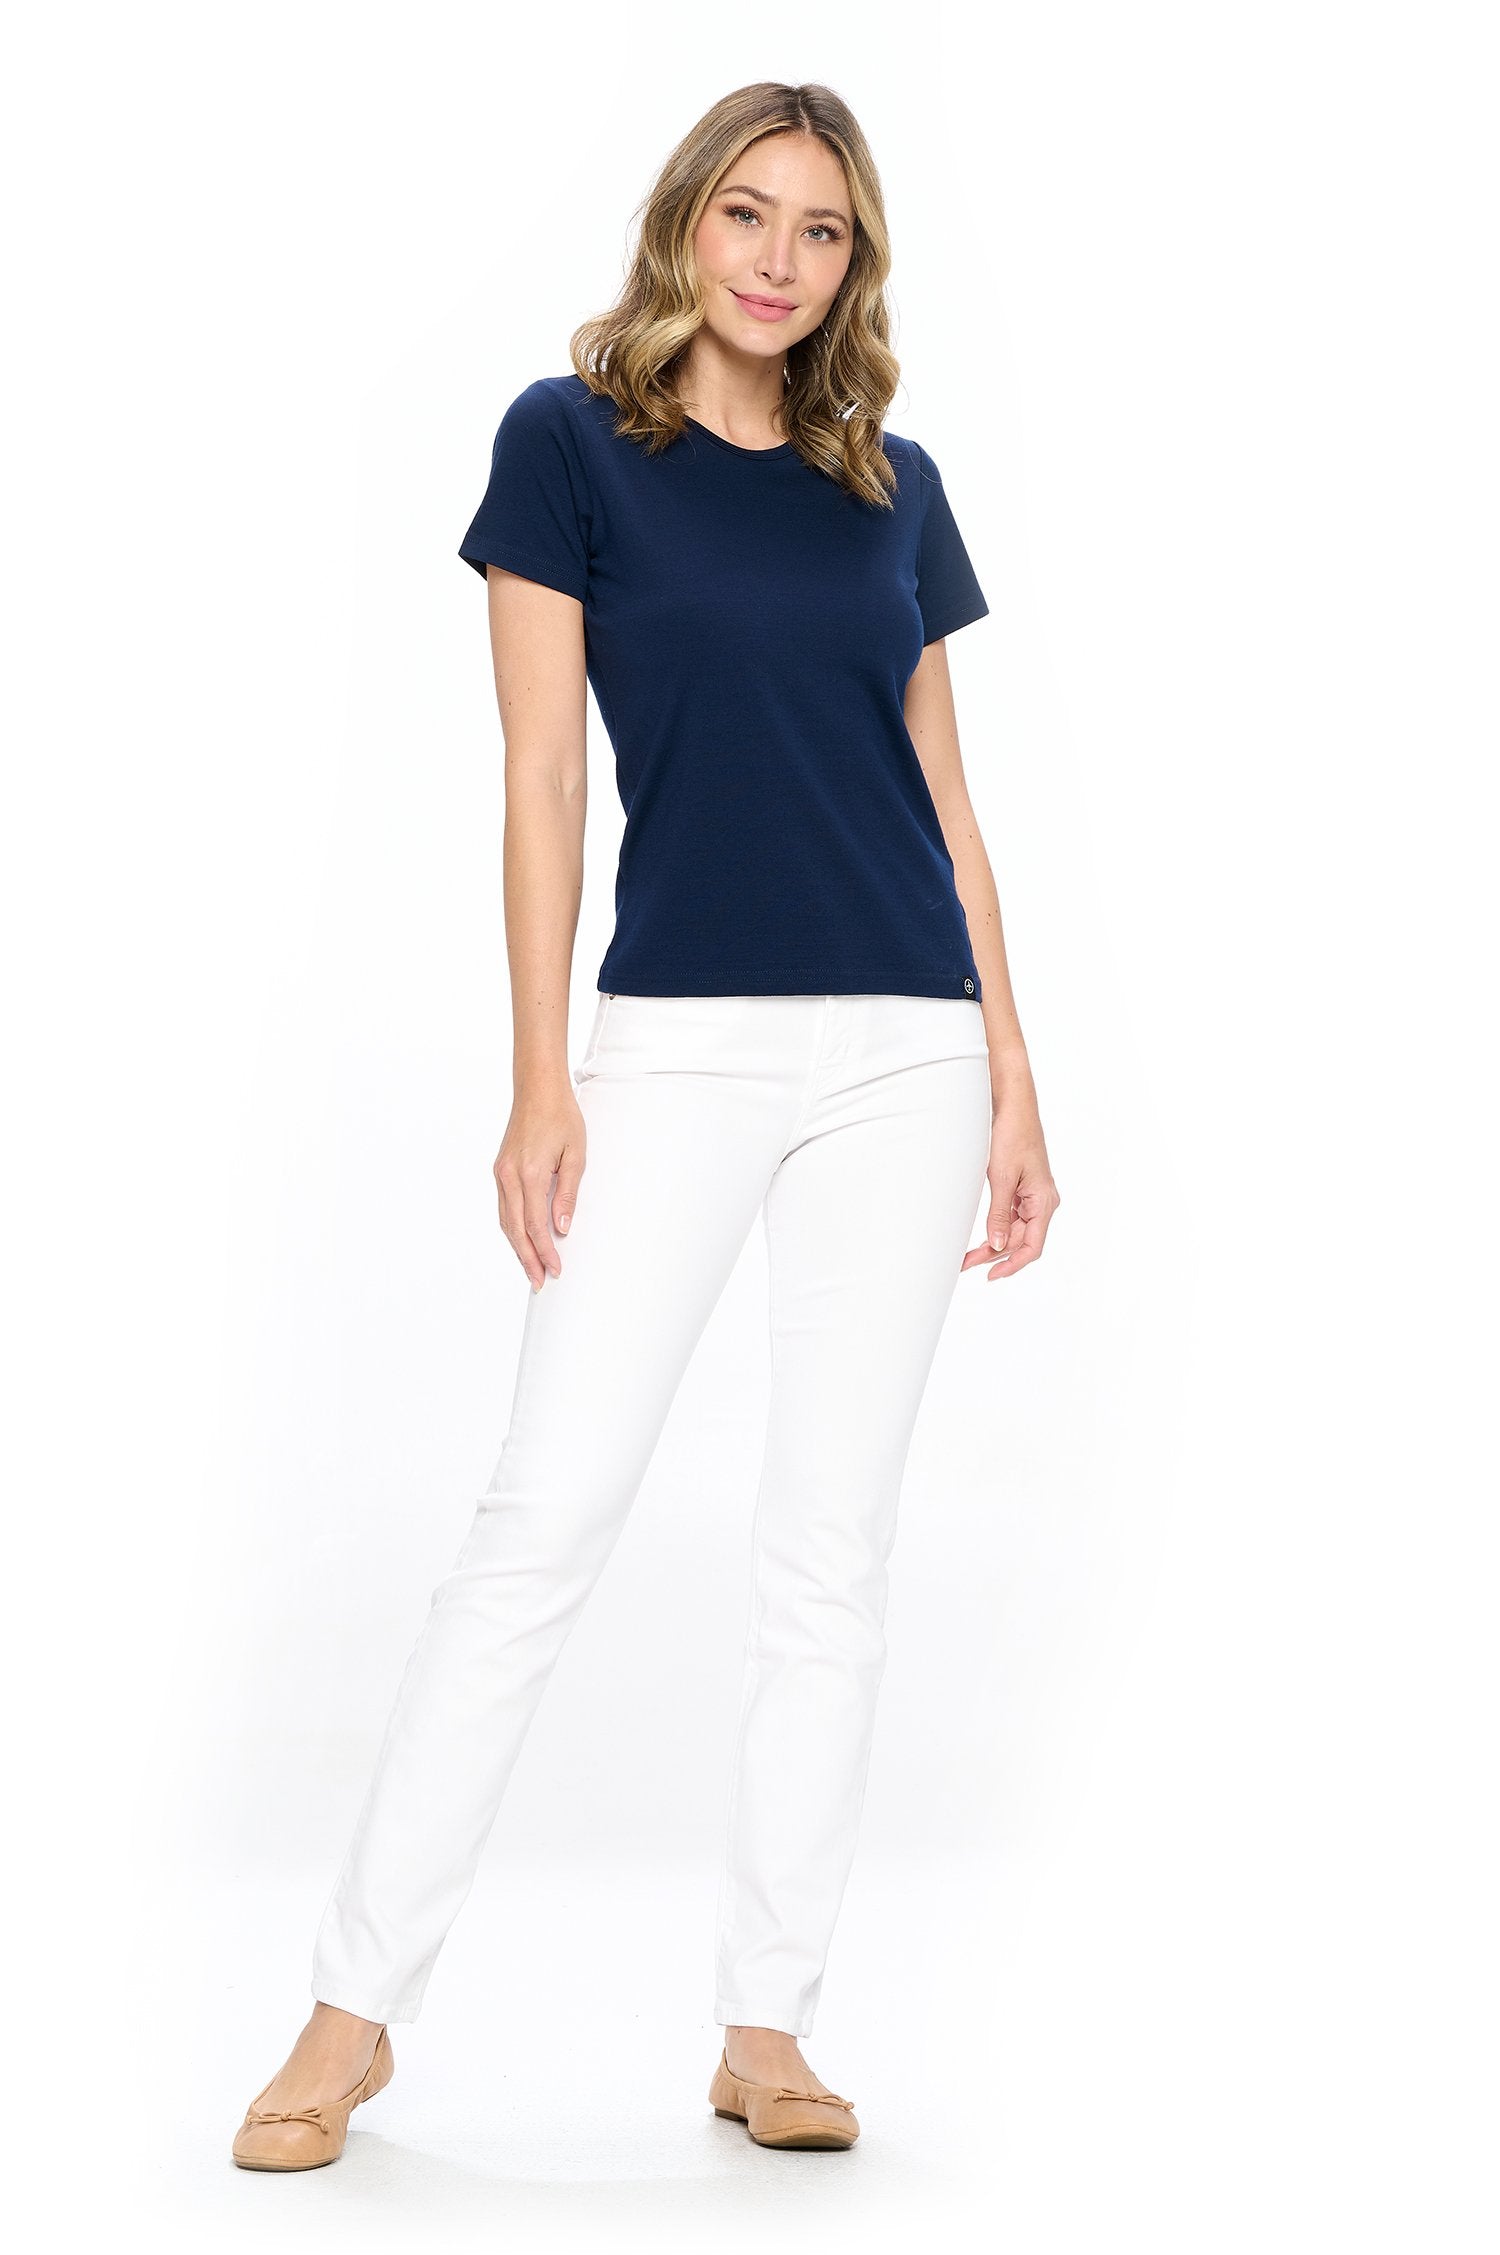 Slim straight comfort fit white travel jeans for women